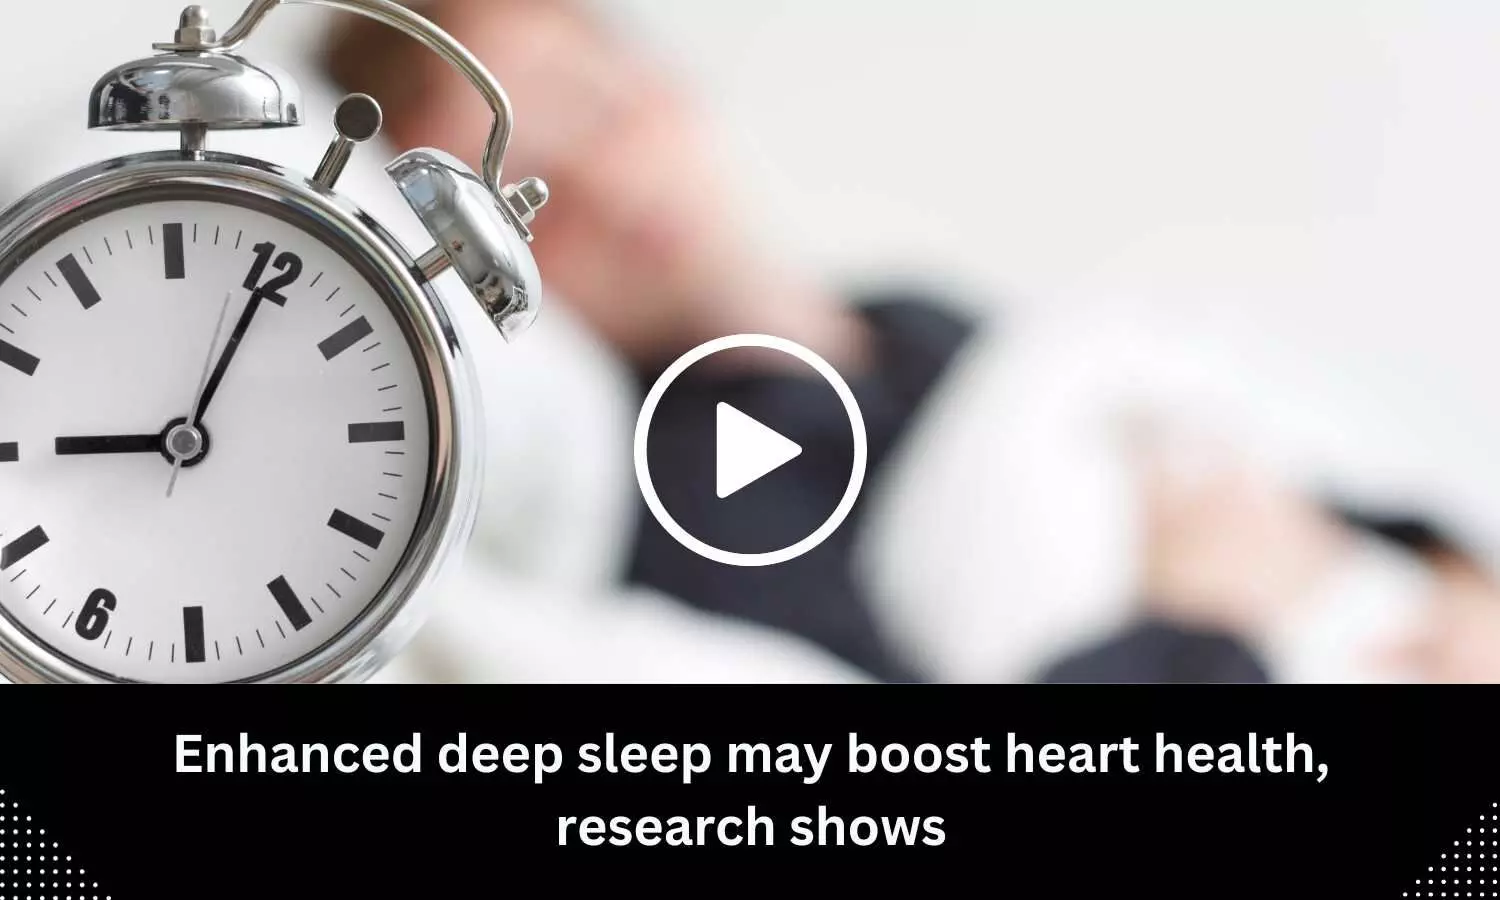 Enhanced deep sleep may boost heart health, research shows